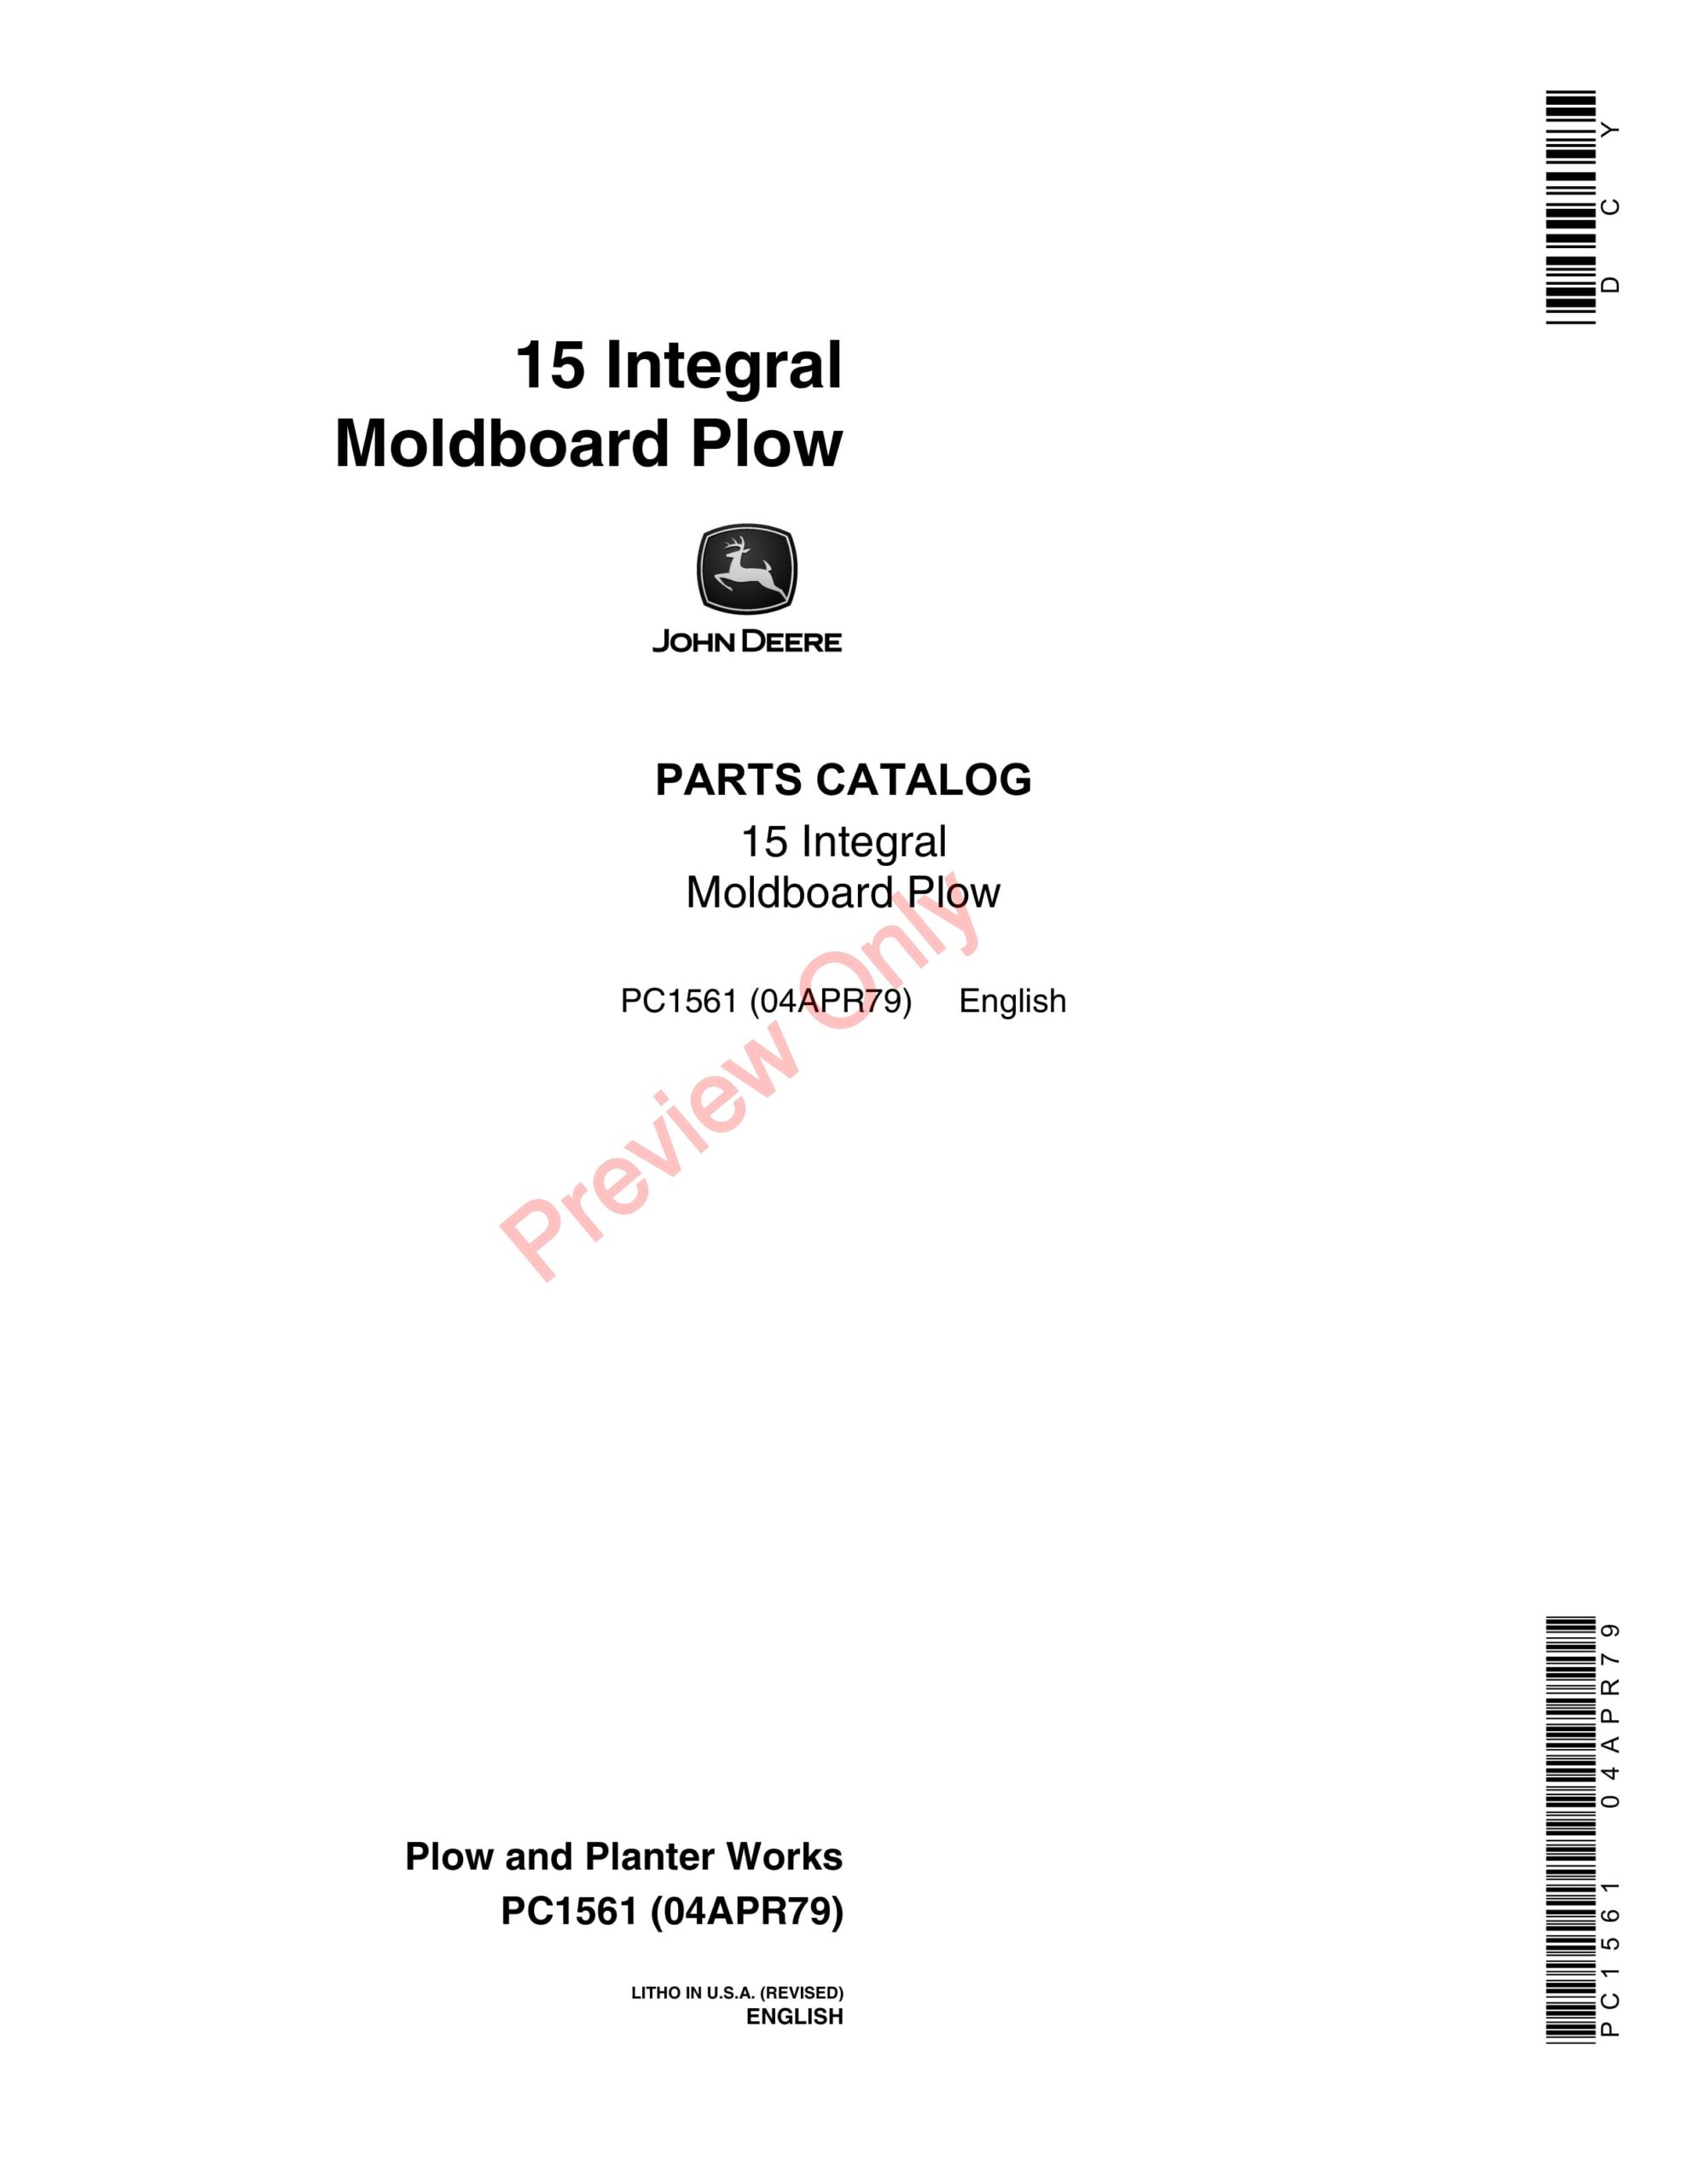 John Deere 15 Integral Moldboard Plow Parts Catalog PC1561 04APR79-1